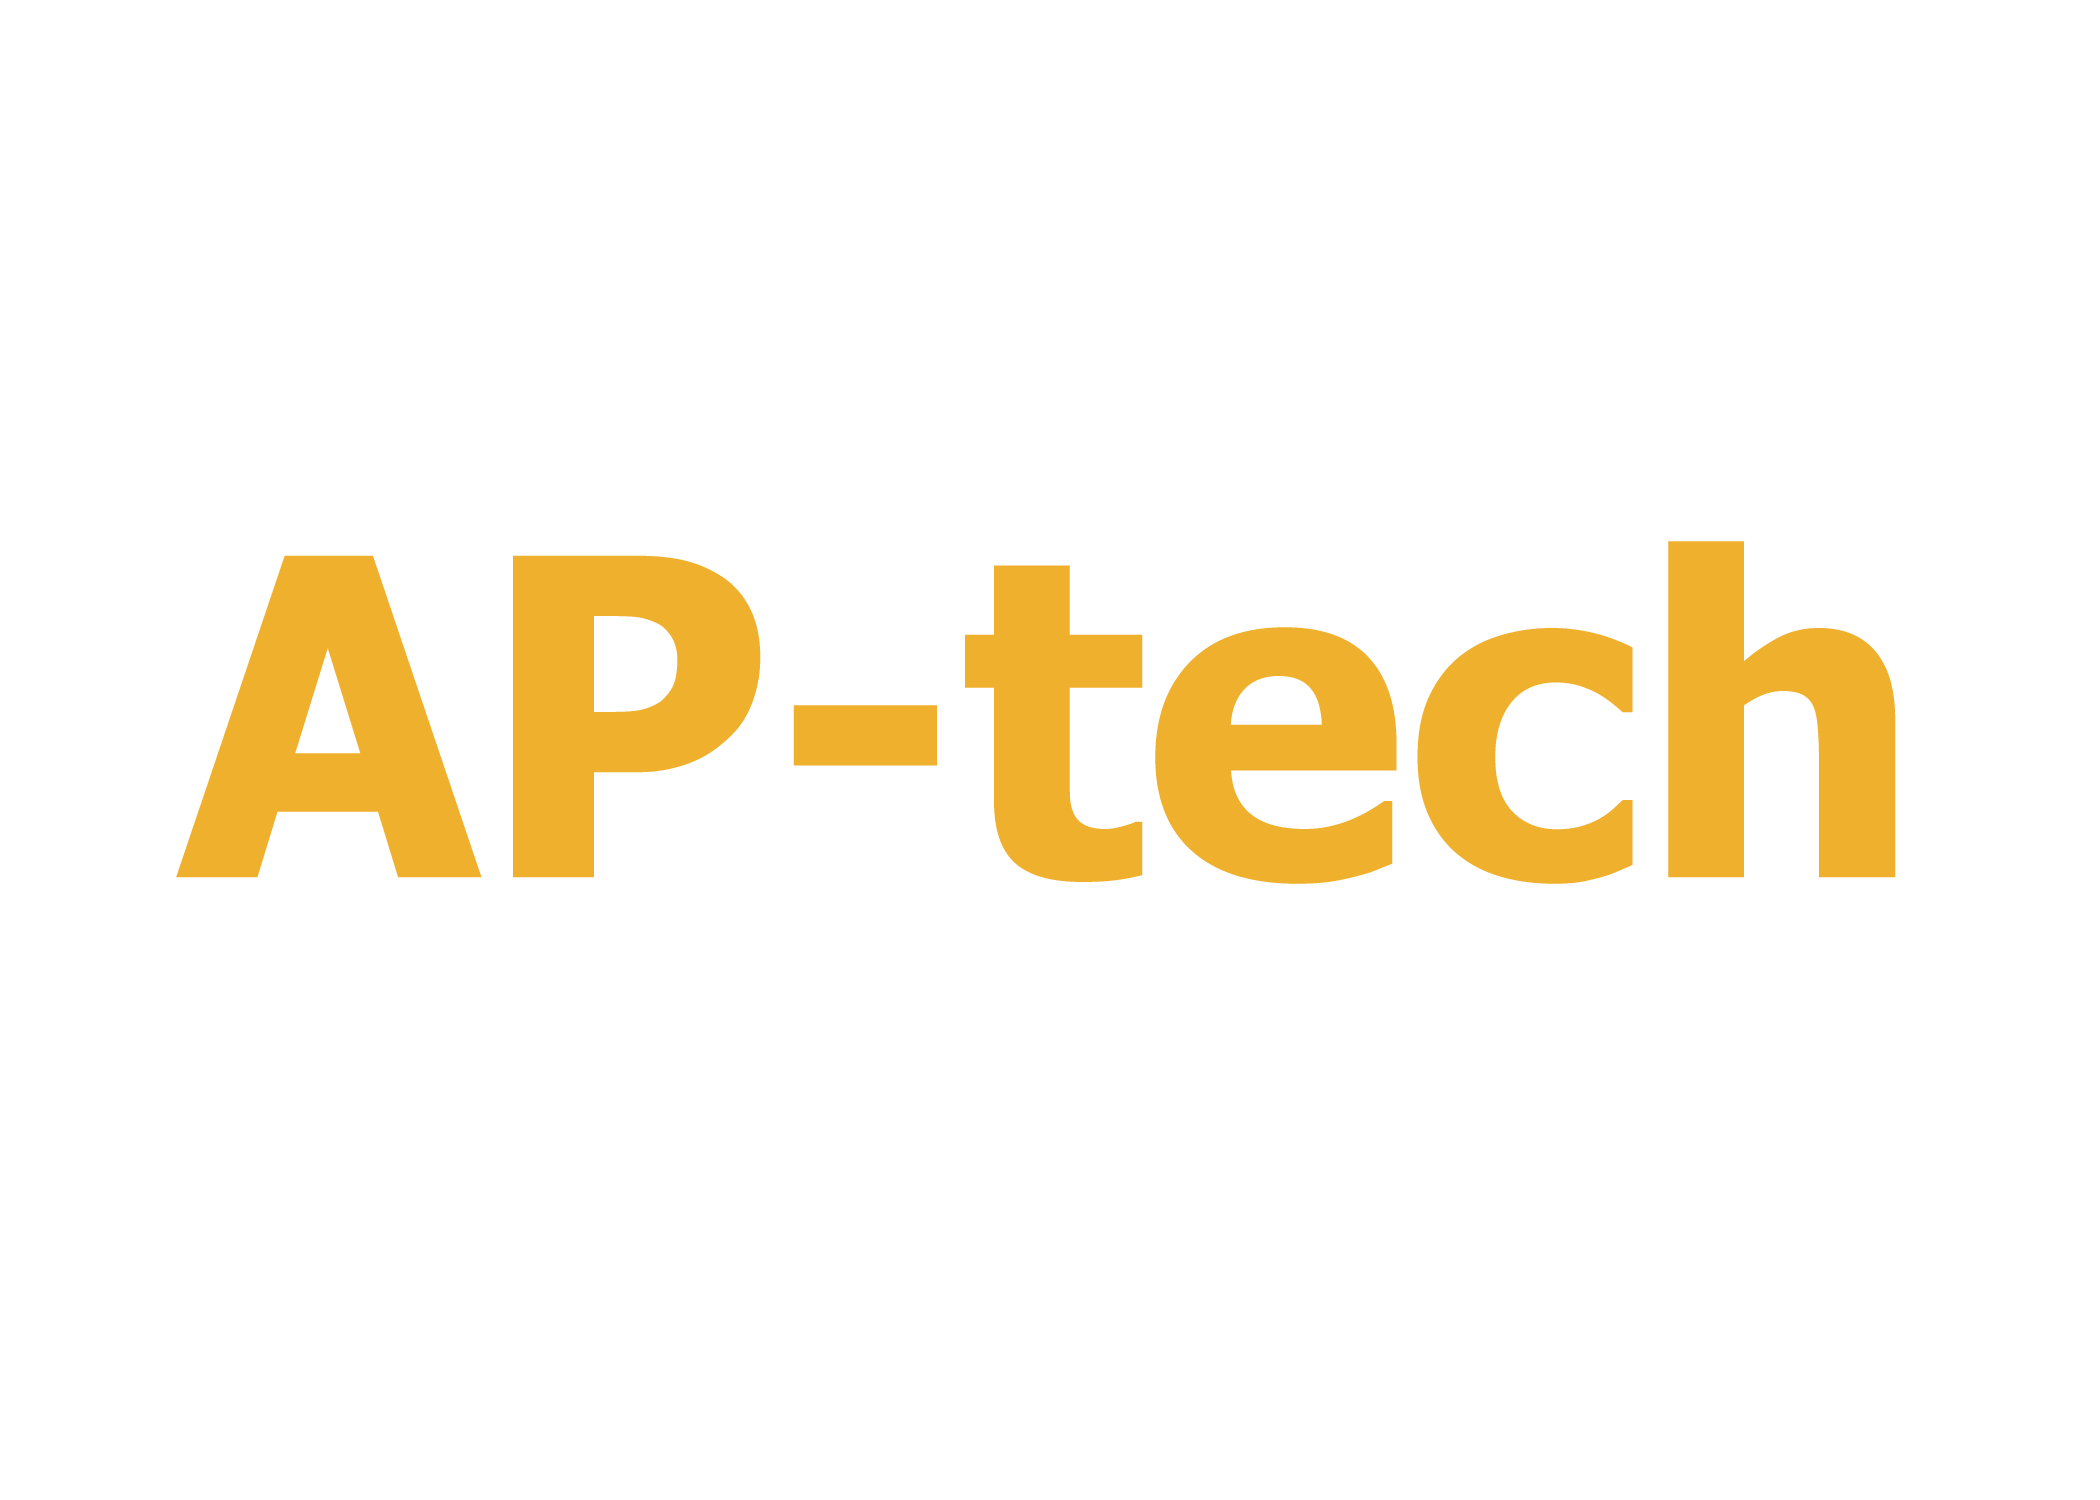 ای پی تک | AP-tech